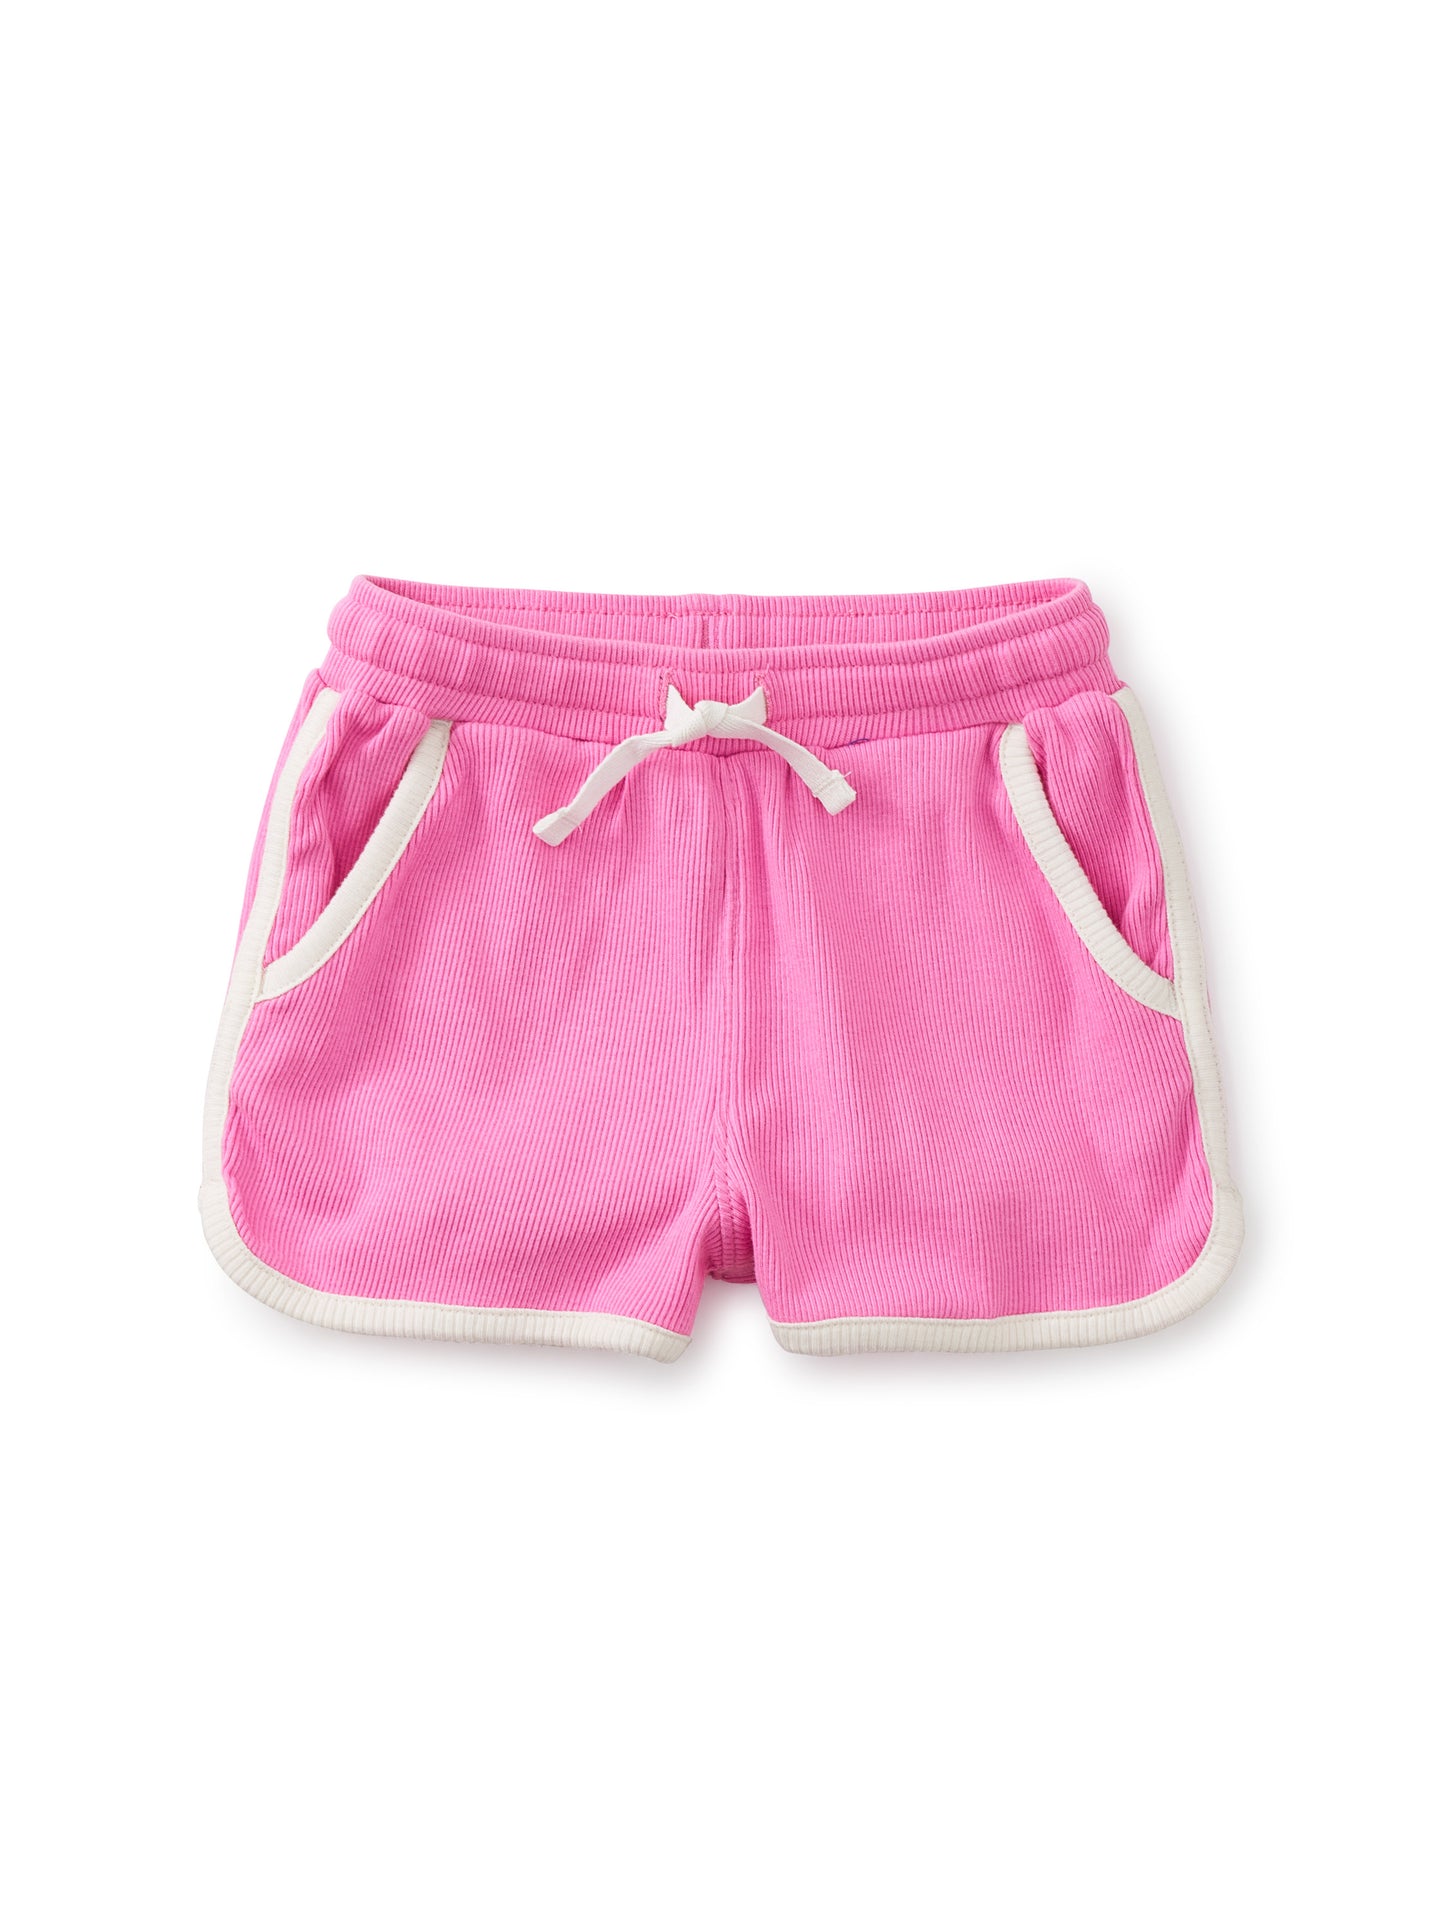 Perennial Pink Piped Gym Shorts